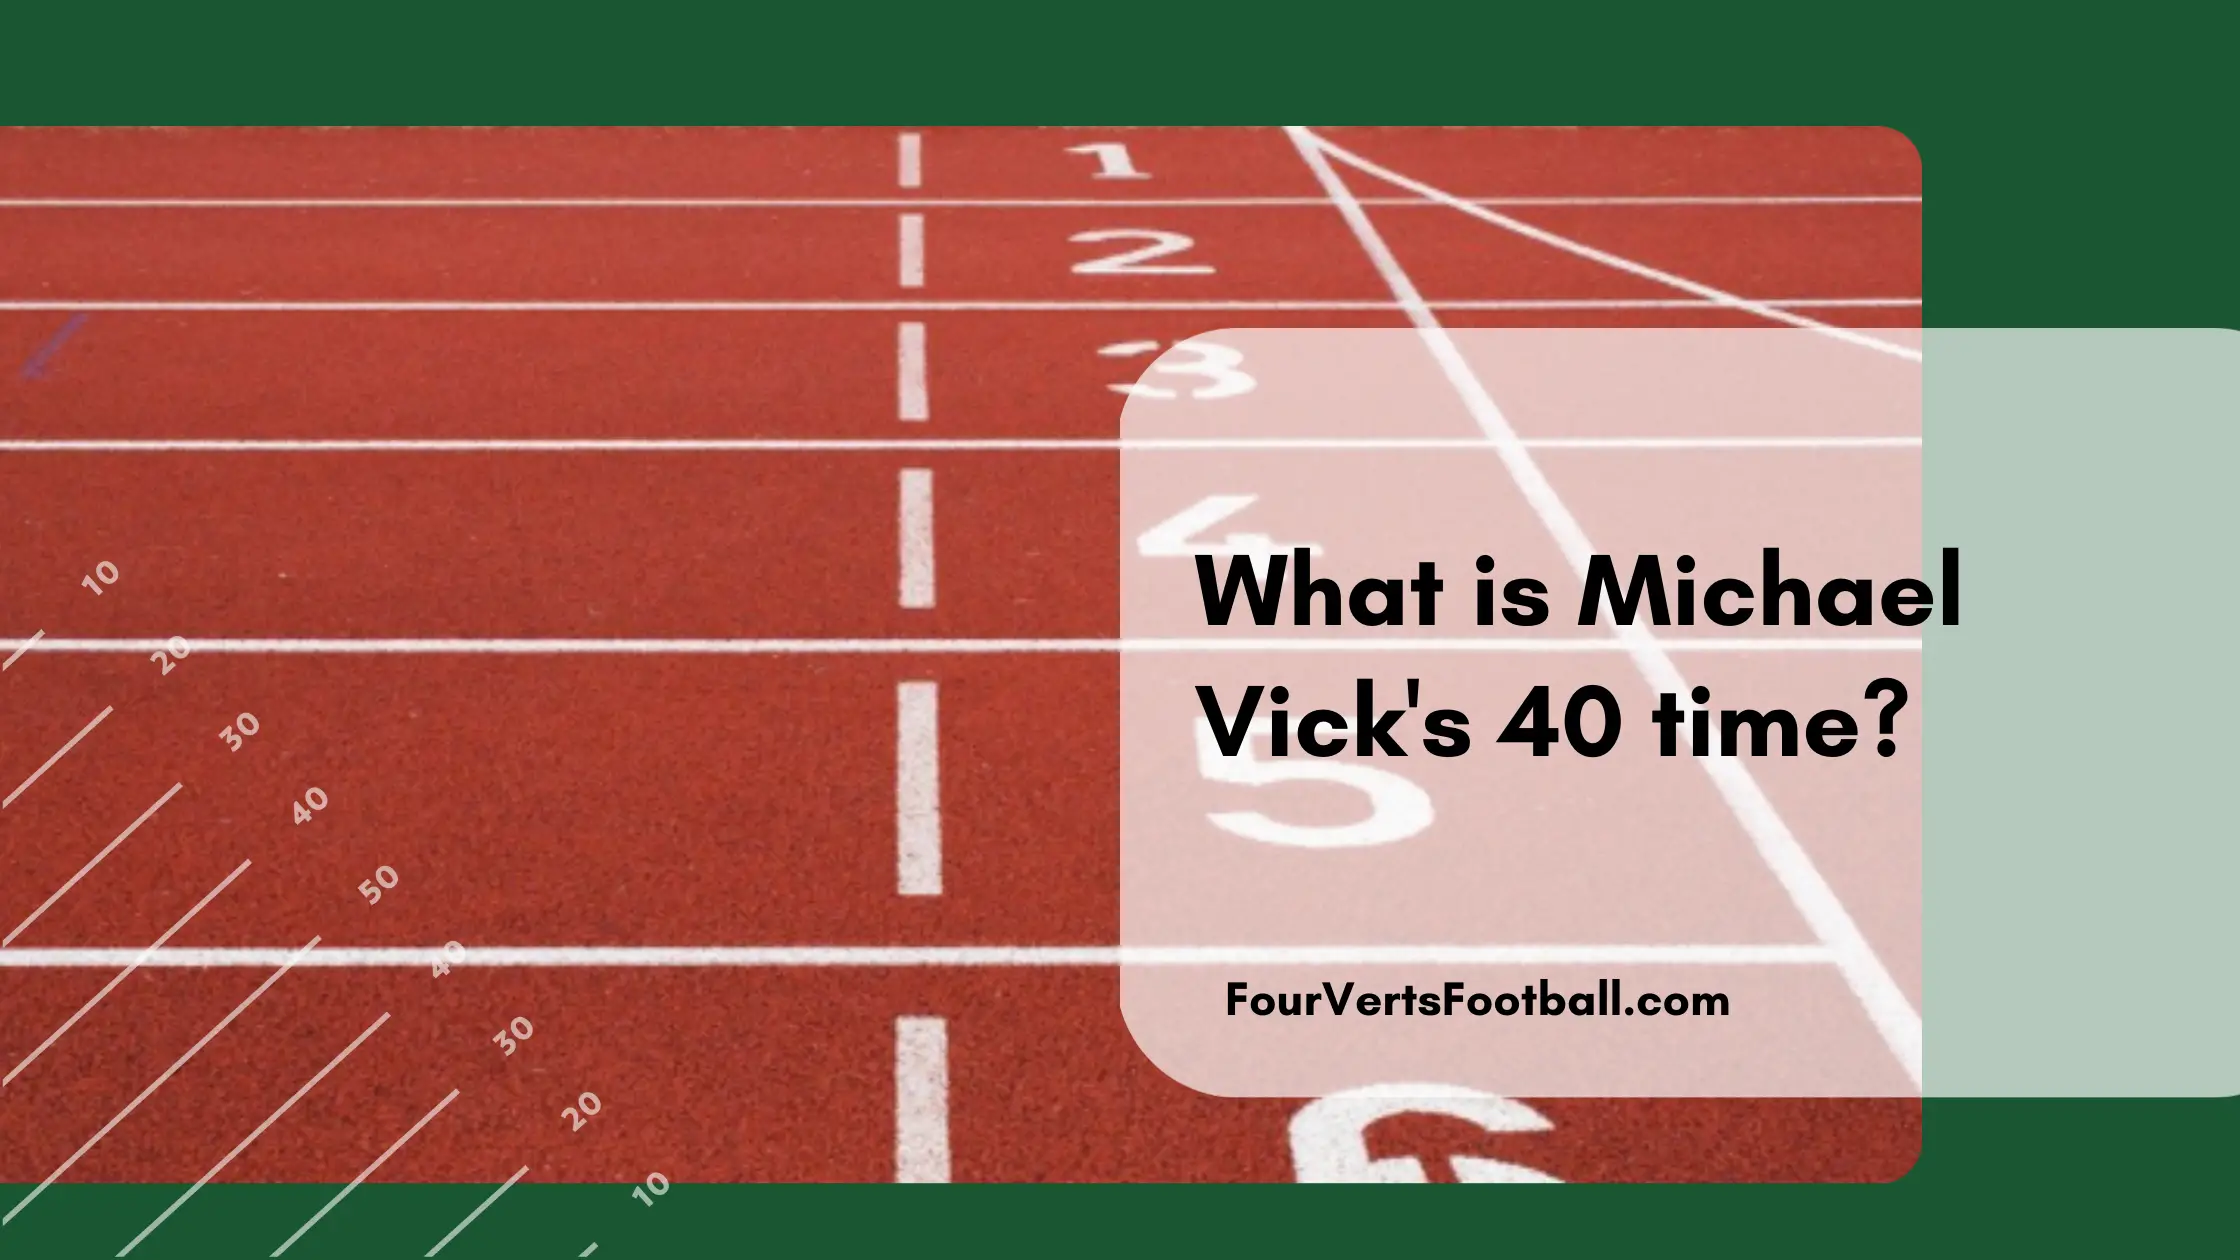 Michael vick's 40 time